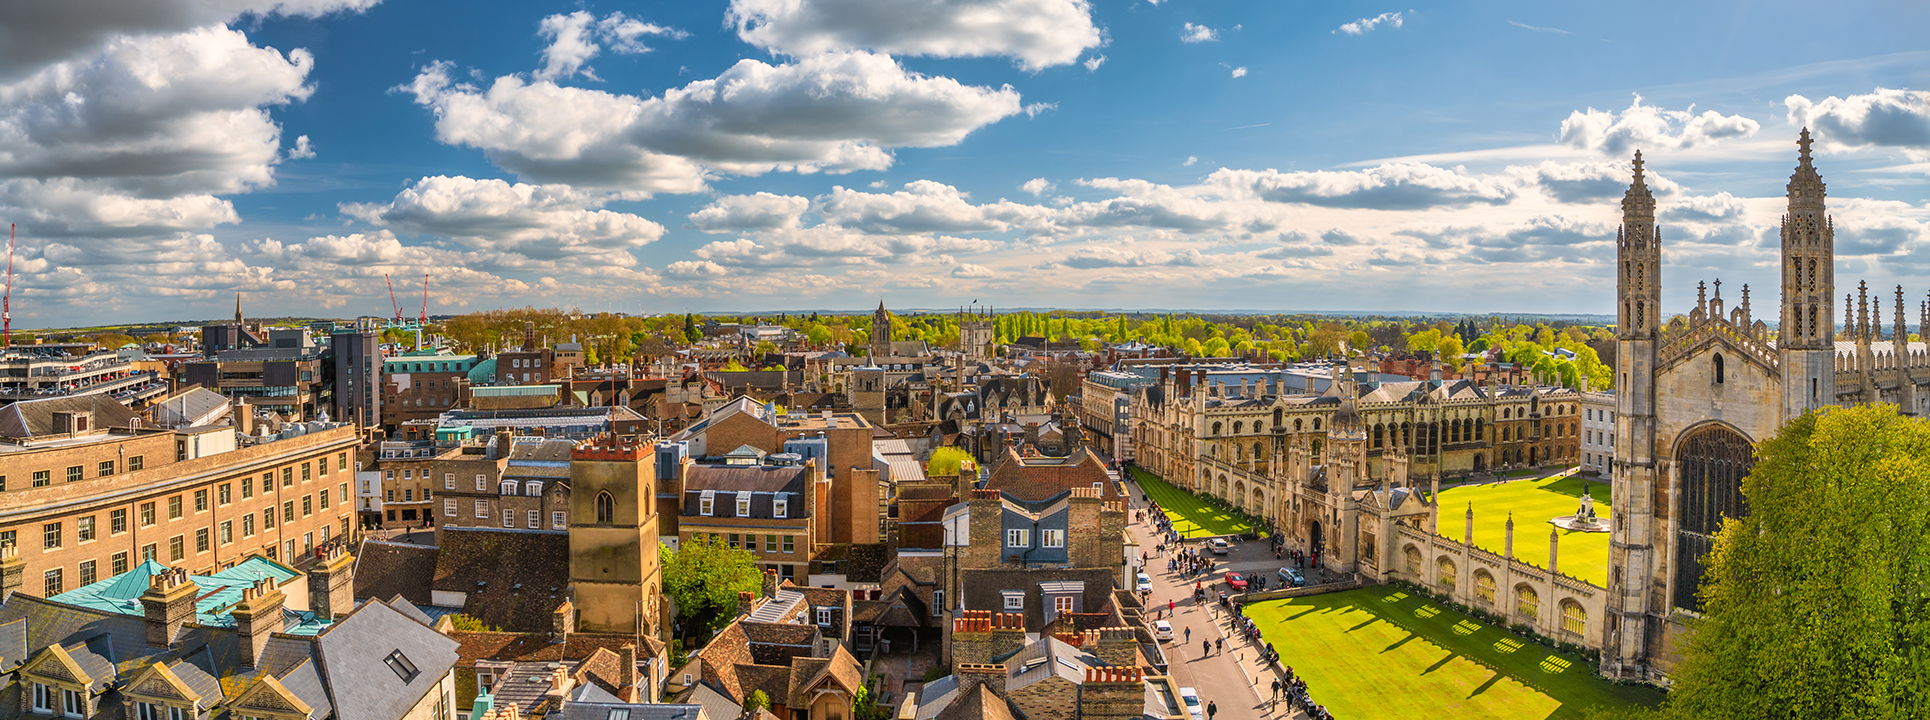 a view of a Cambridge skyline